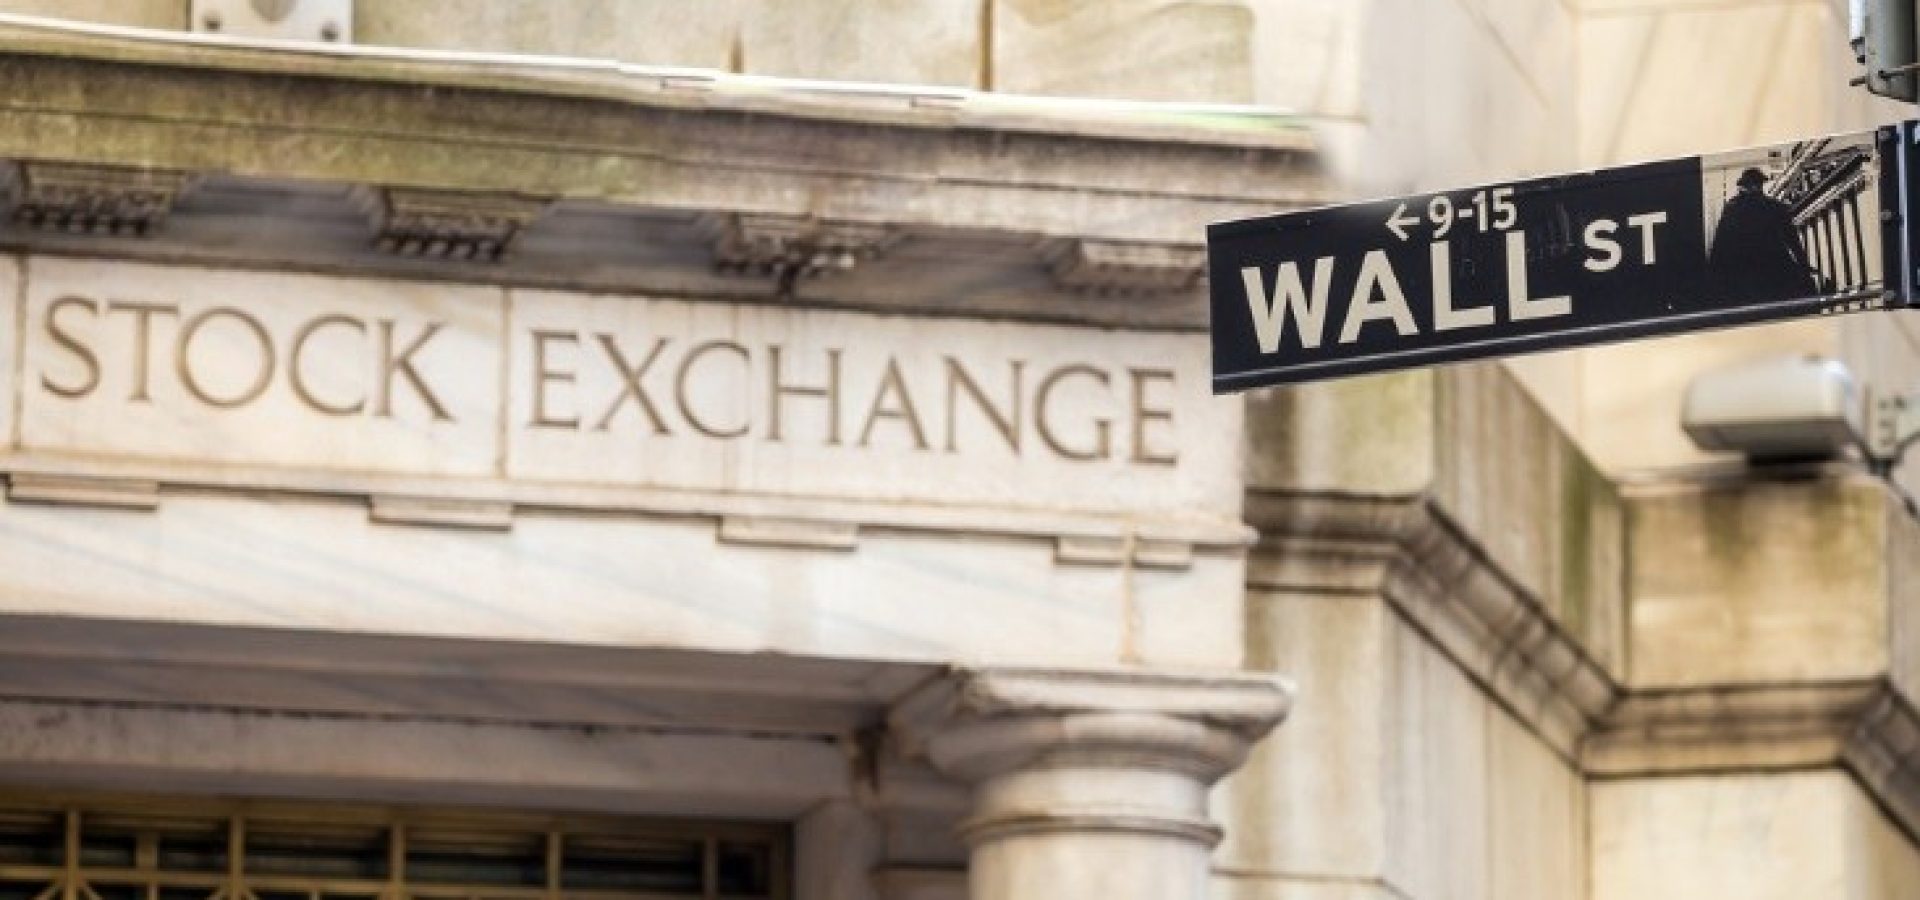 stock exchanges in wall street – wibestbroker